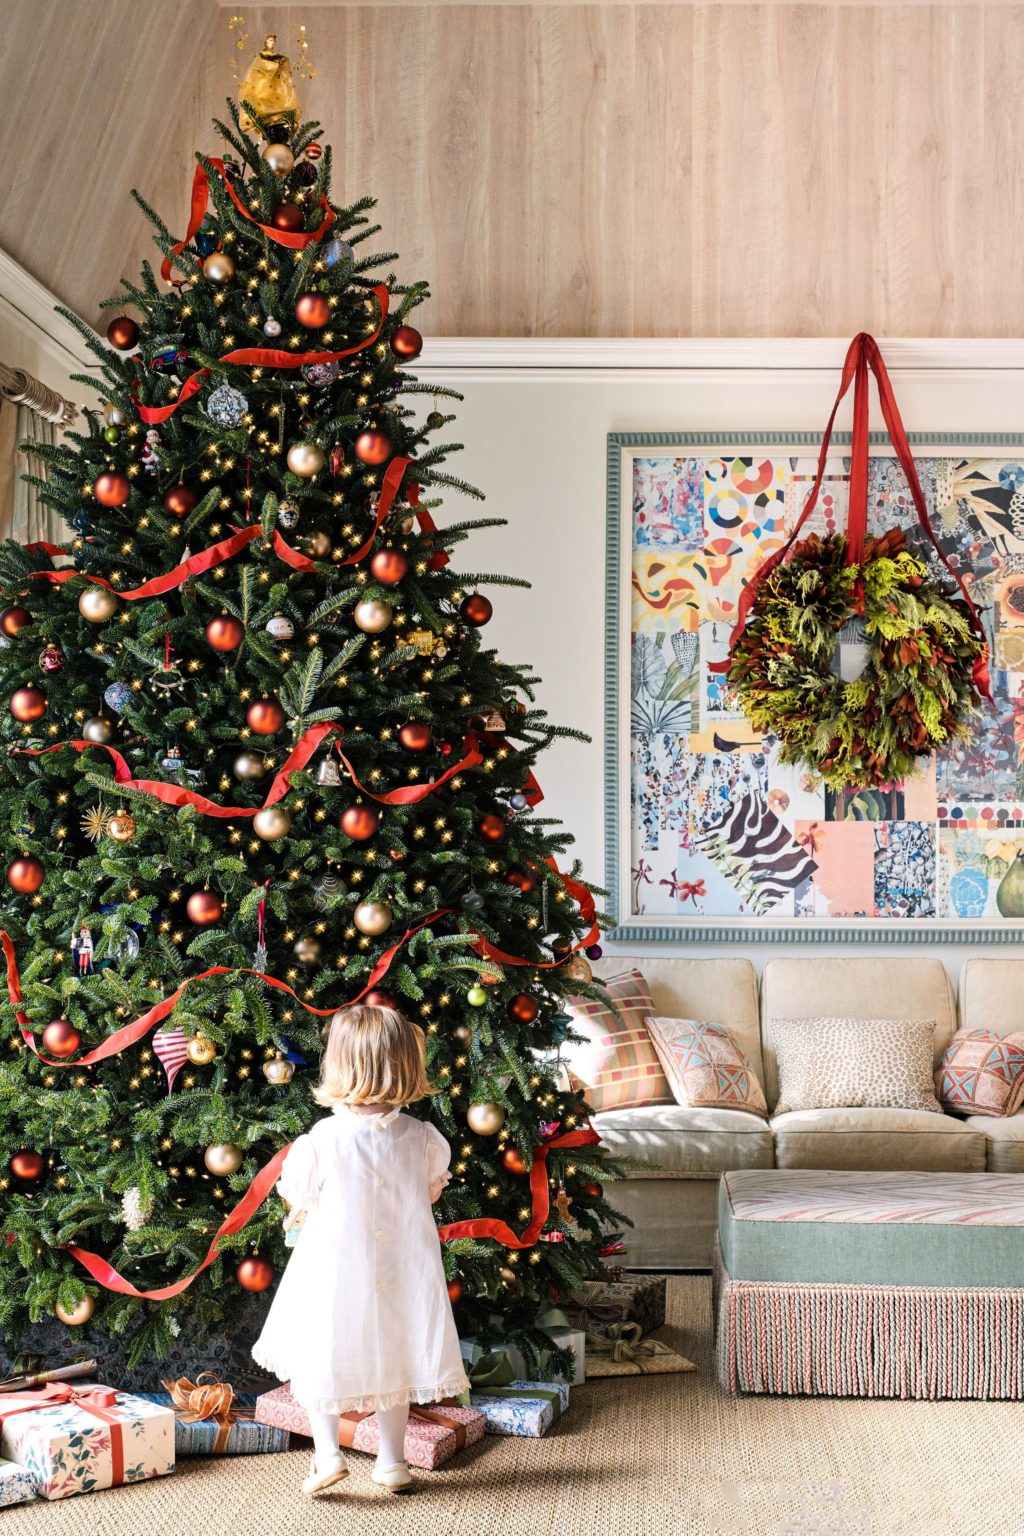 Christmas tree Decorations. 2 50+ Top Christmas Tree Decoration Ideas - 24